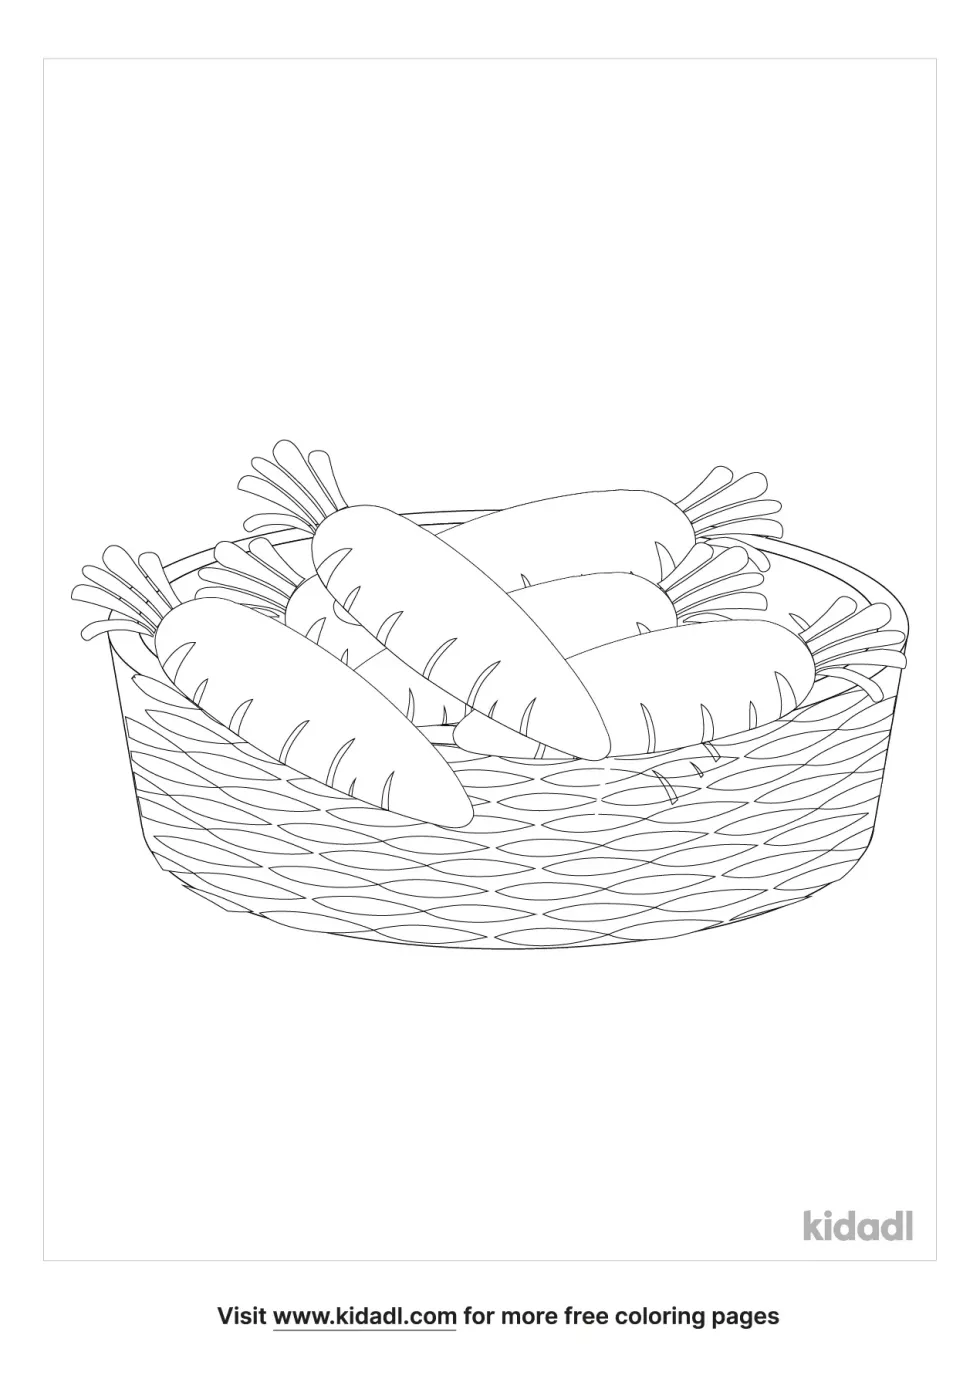 Basket Of Carrots